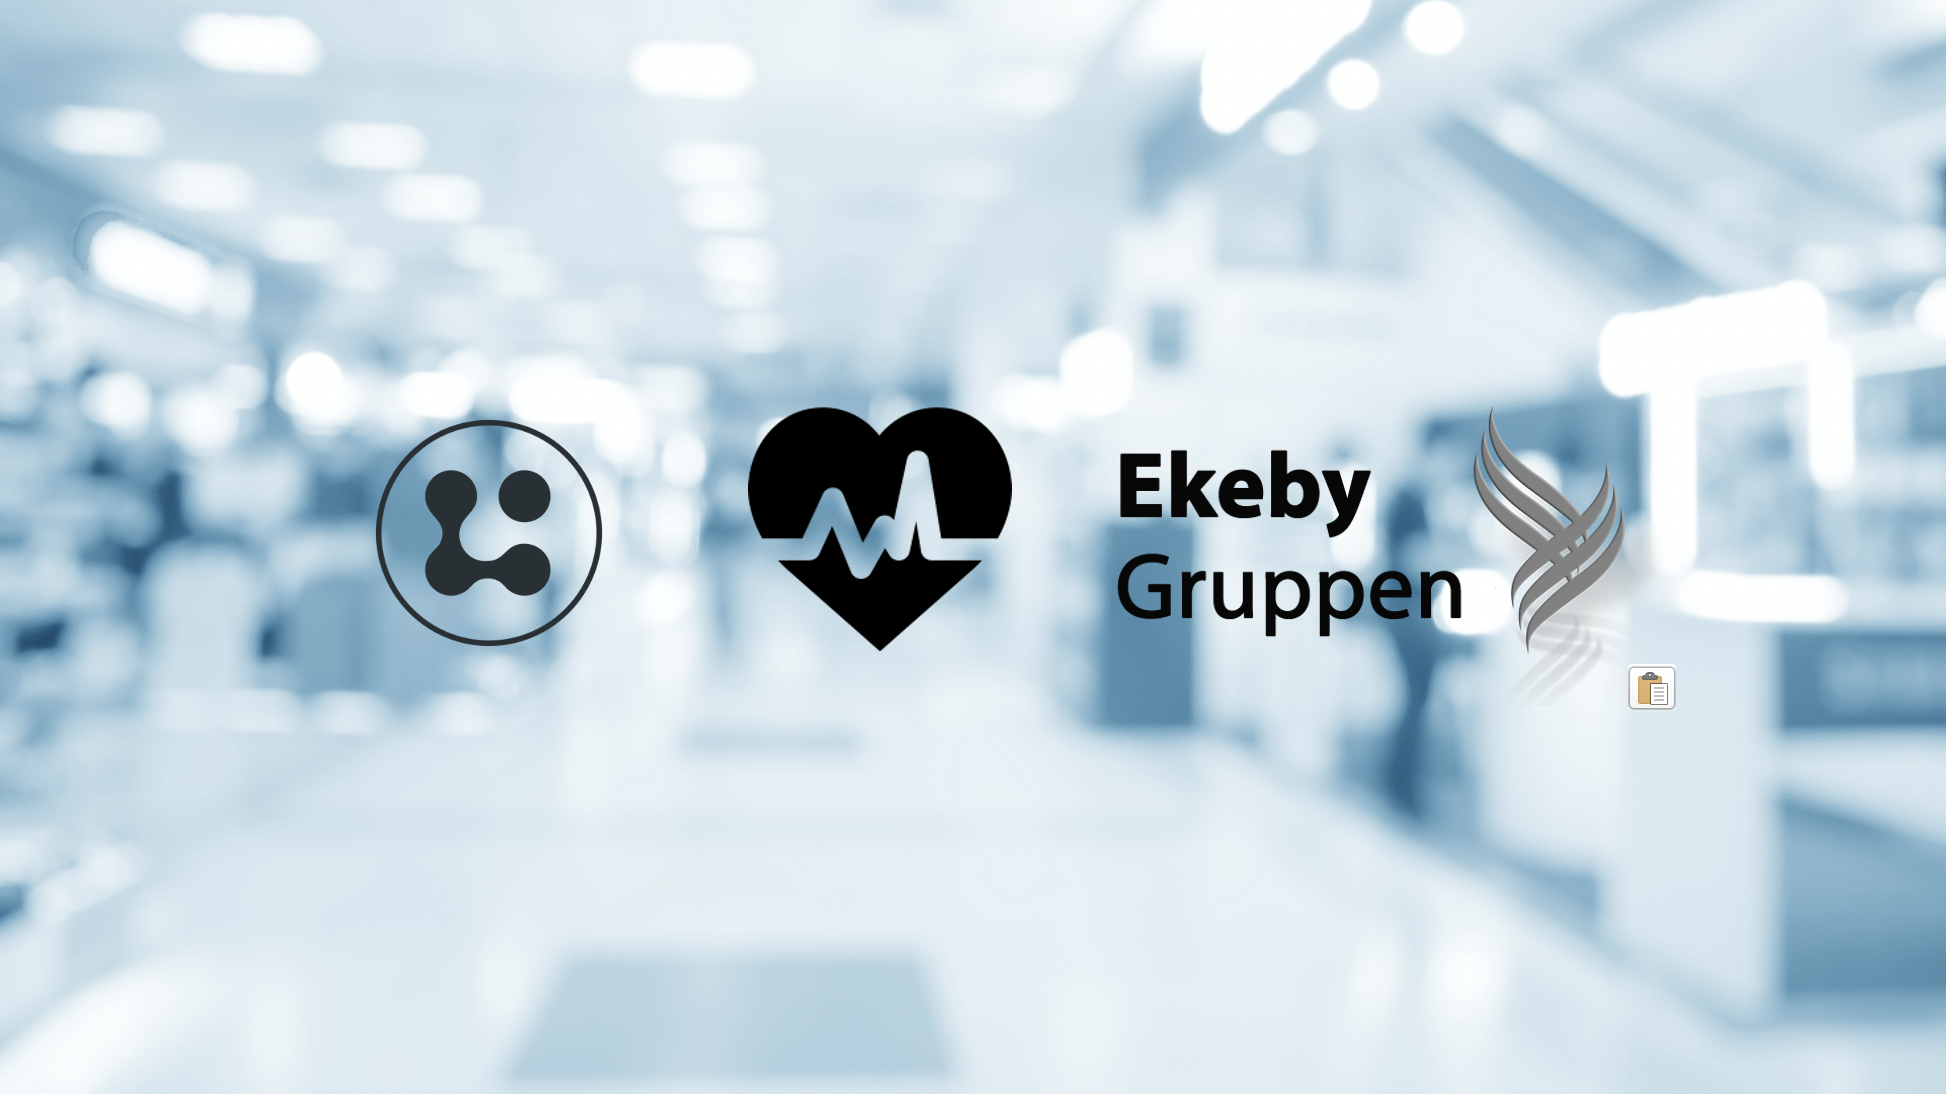 Welcome Ekebygruppen to TIQQE